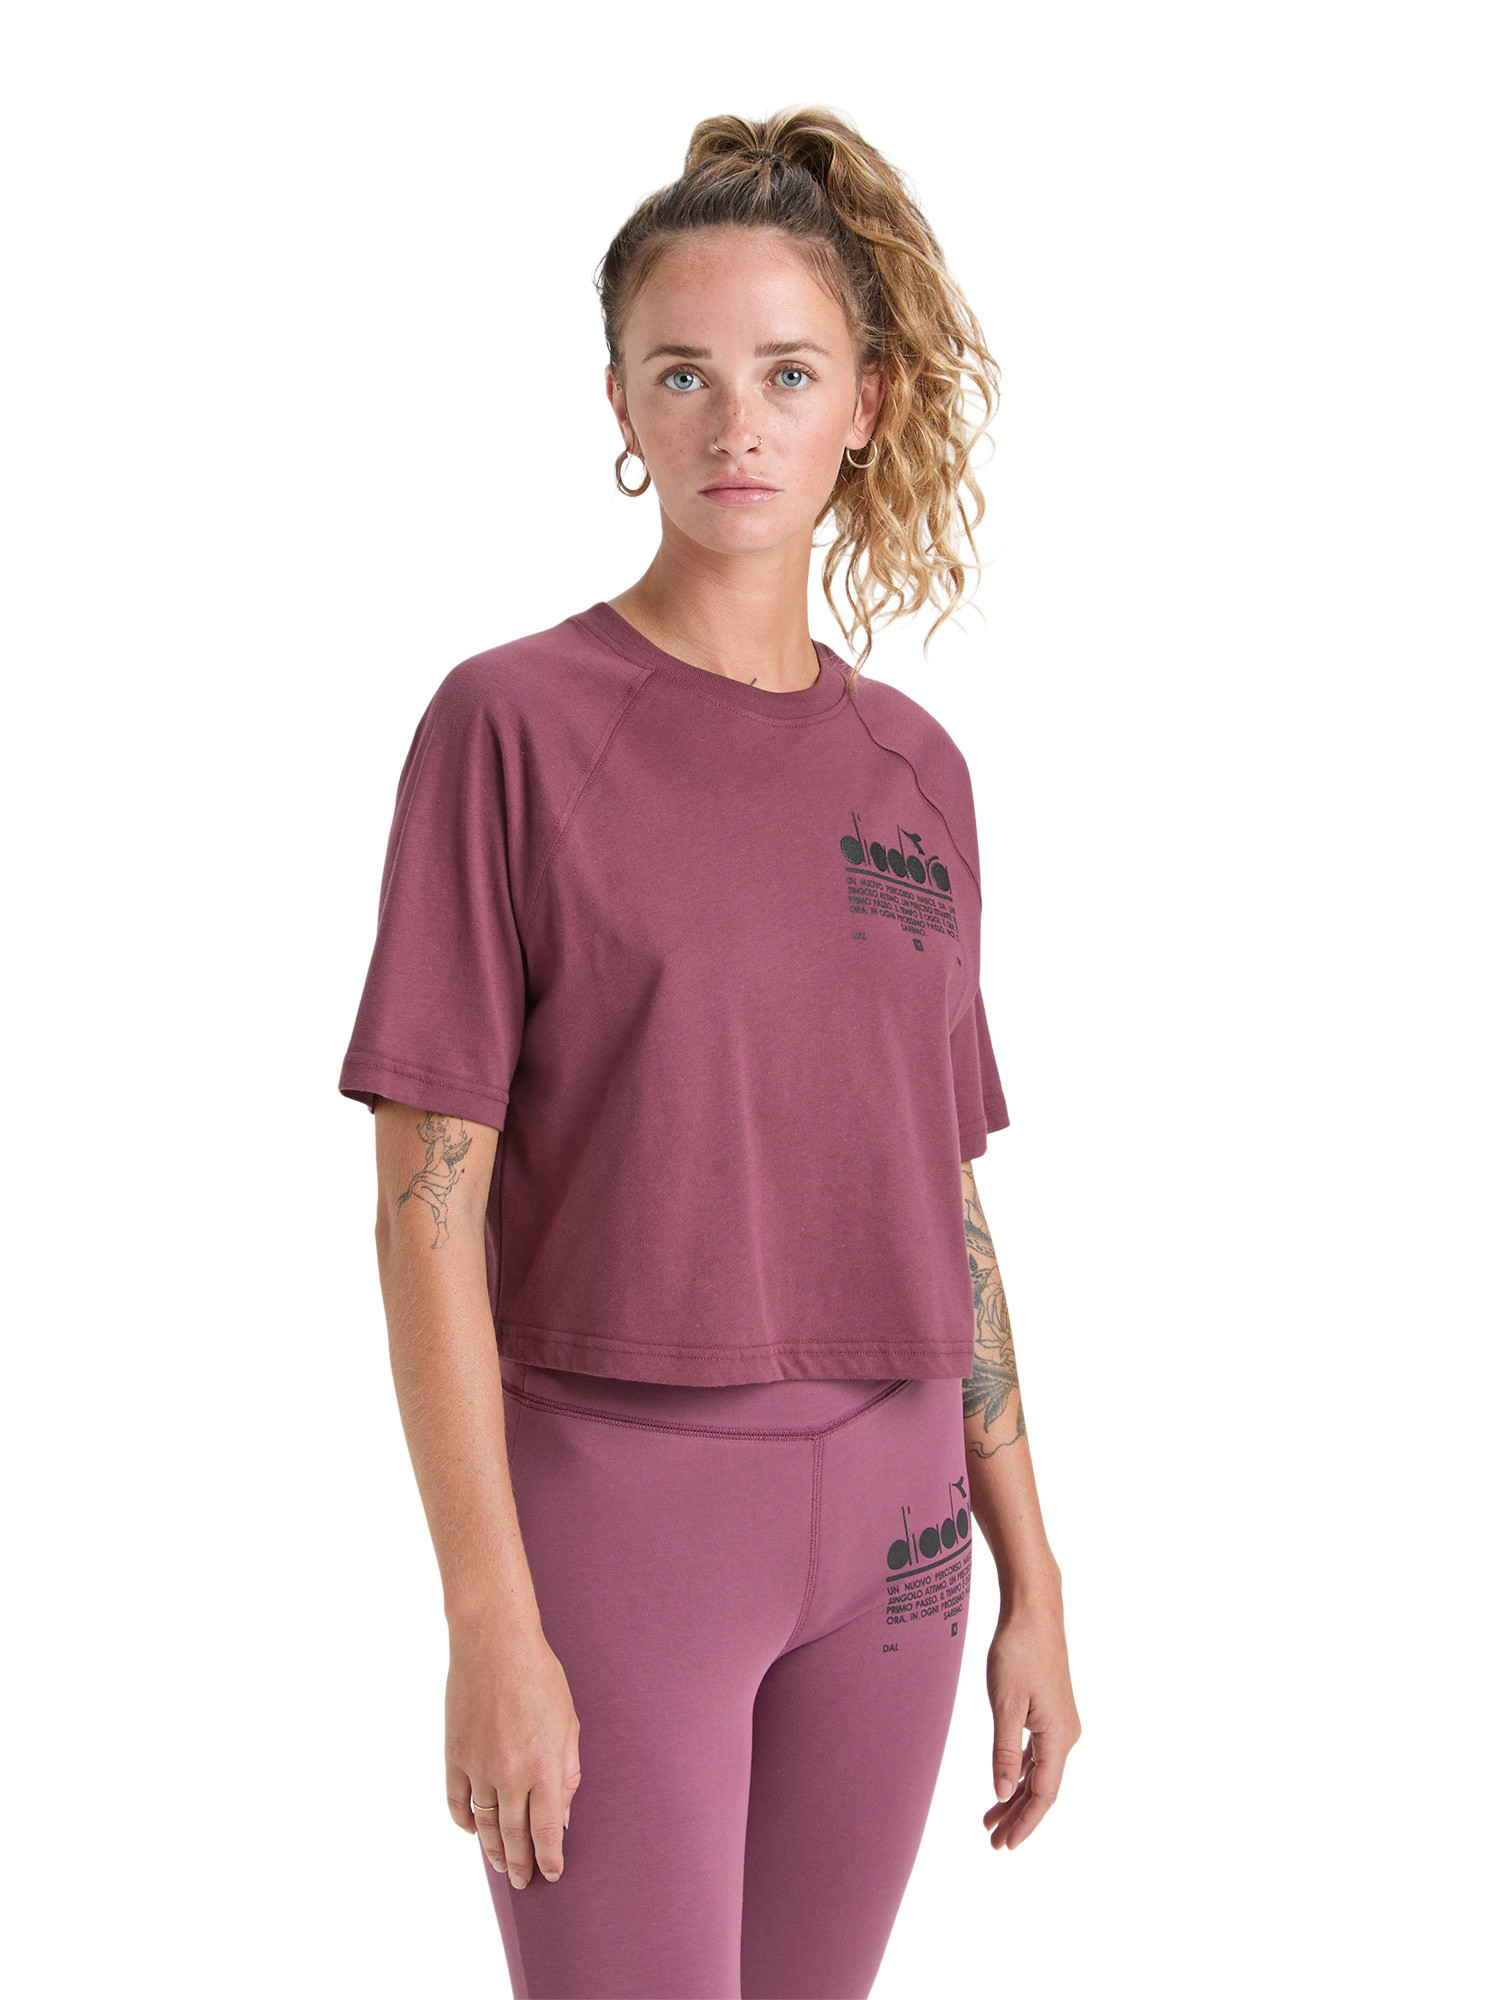 Diadora - Manifesto cotton T-shirt, Purple, large image number 2